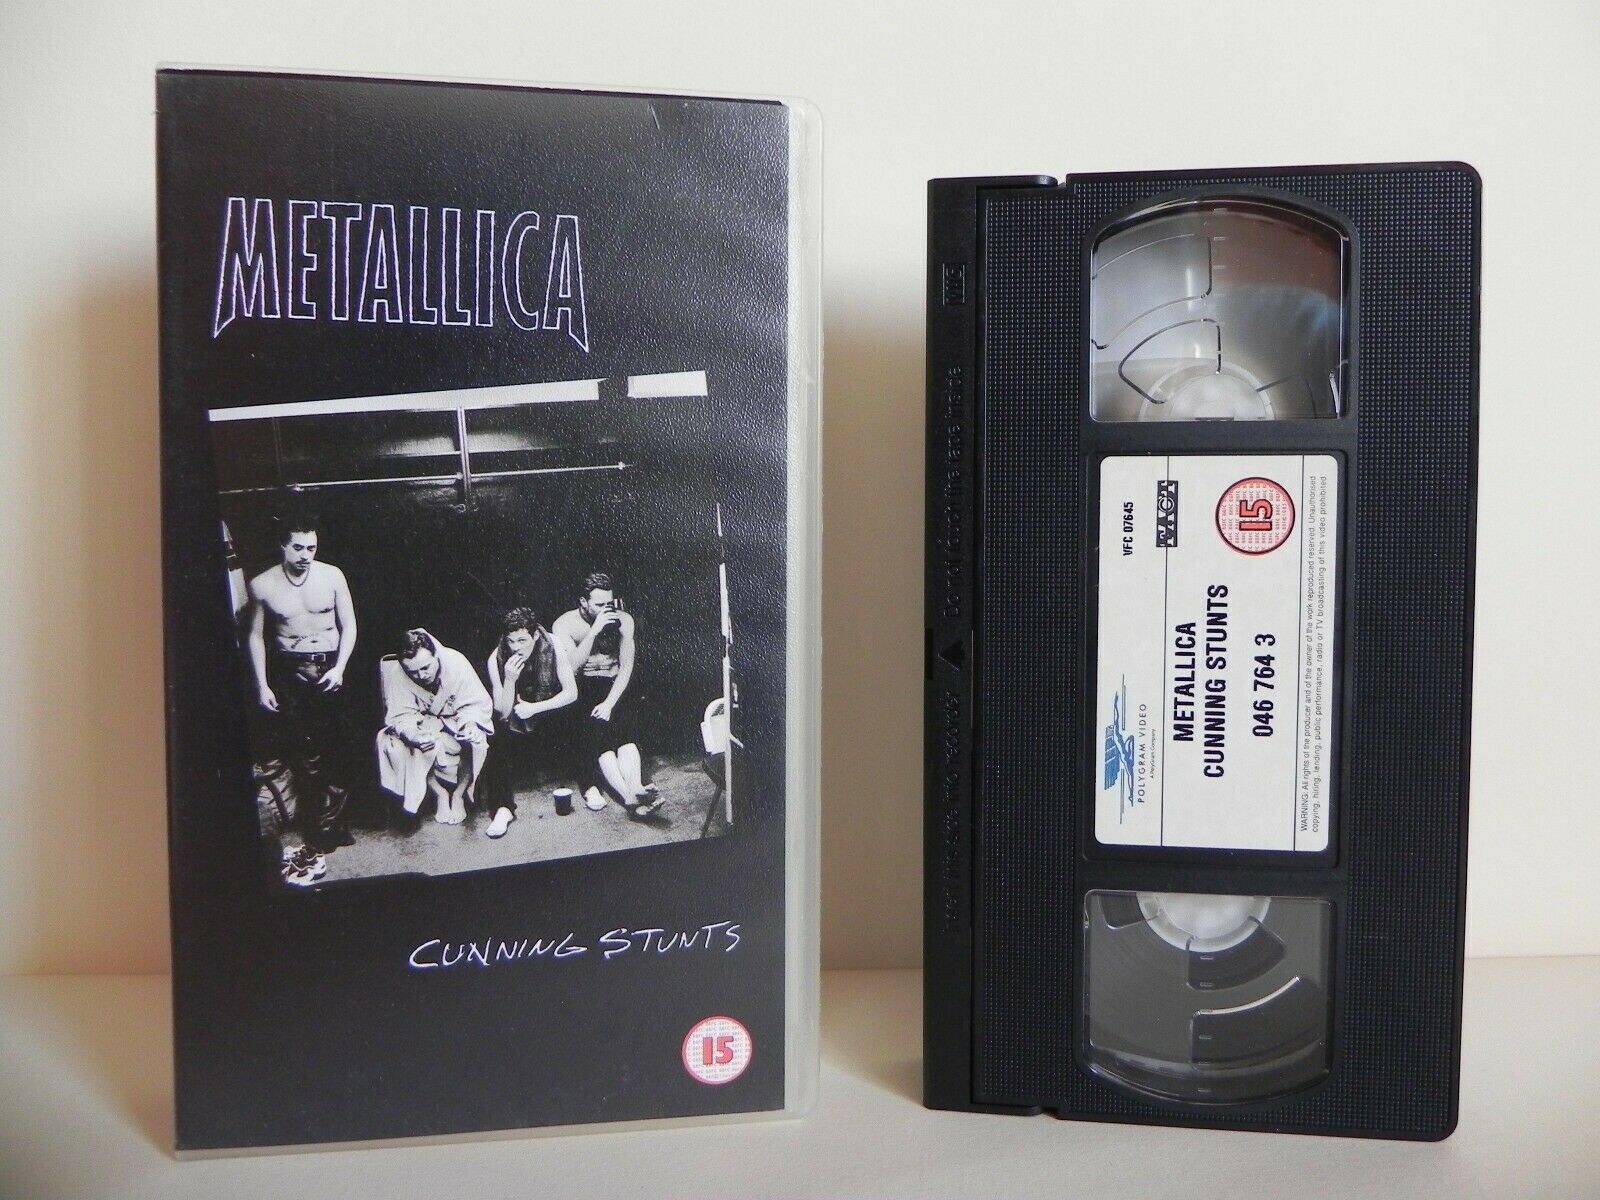 Metallica: Cunning Stunts - Live Texas, USA - May 9-10, 1997 - Music - Pal VHS-